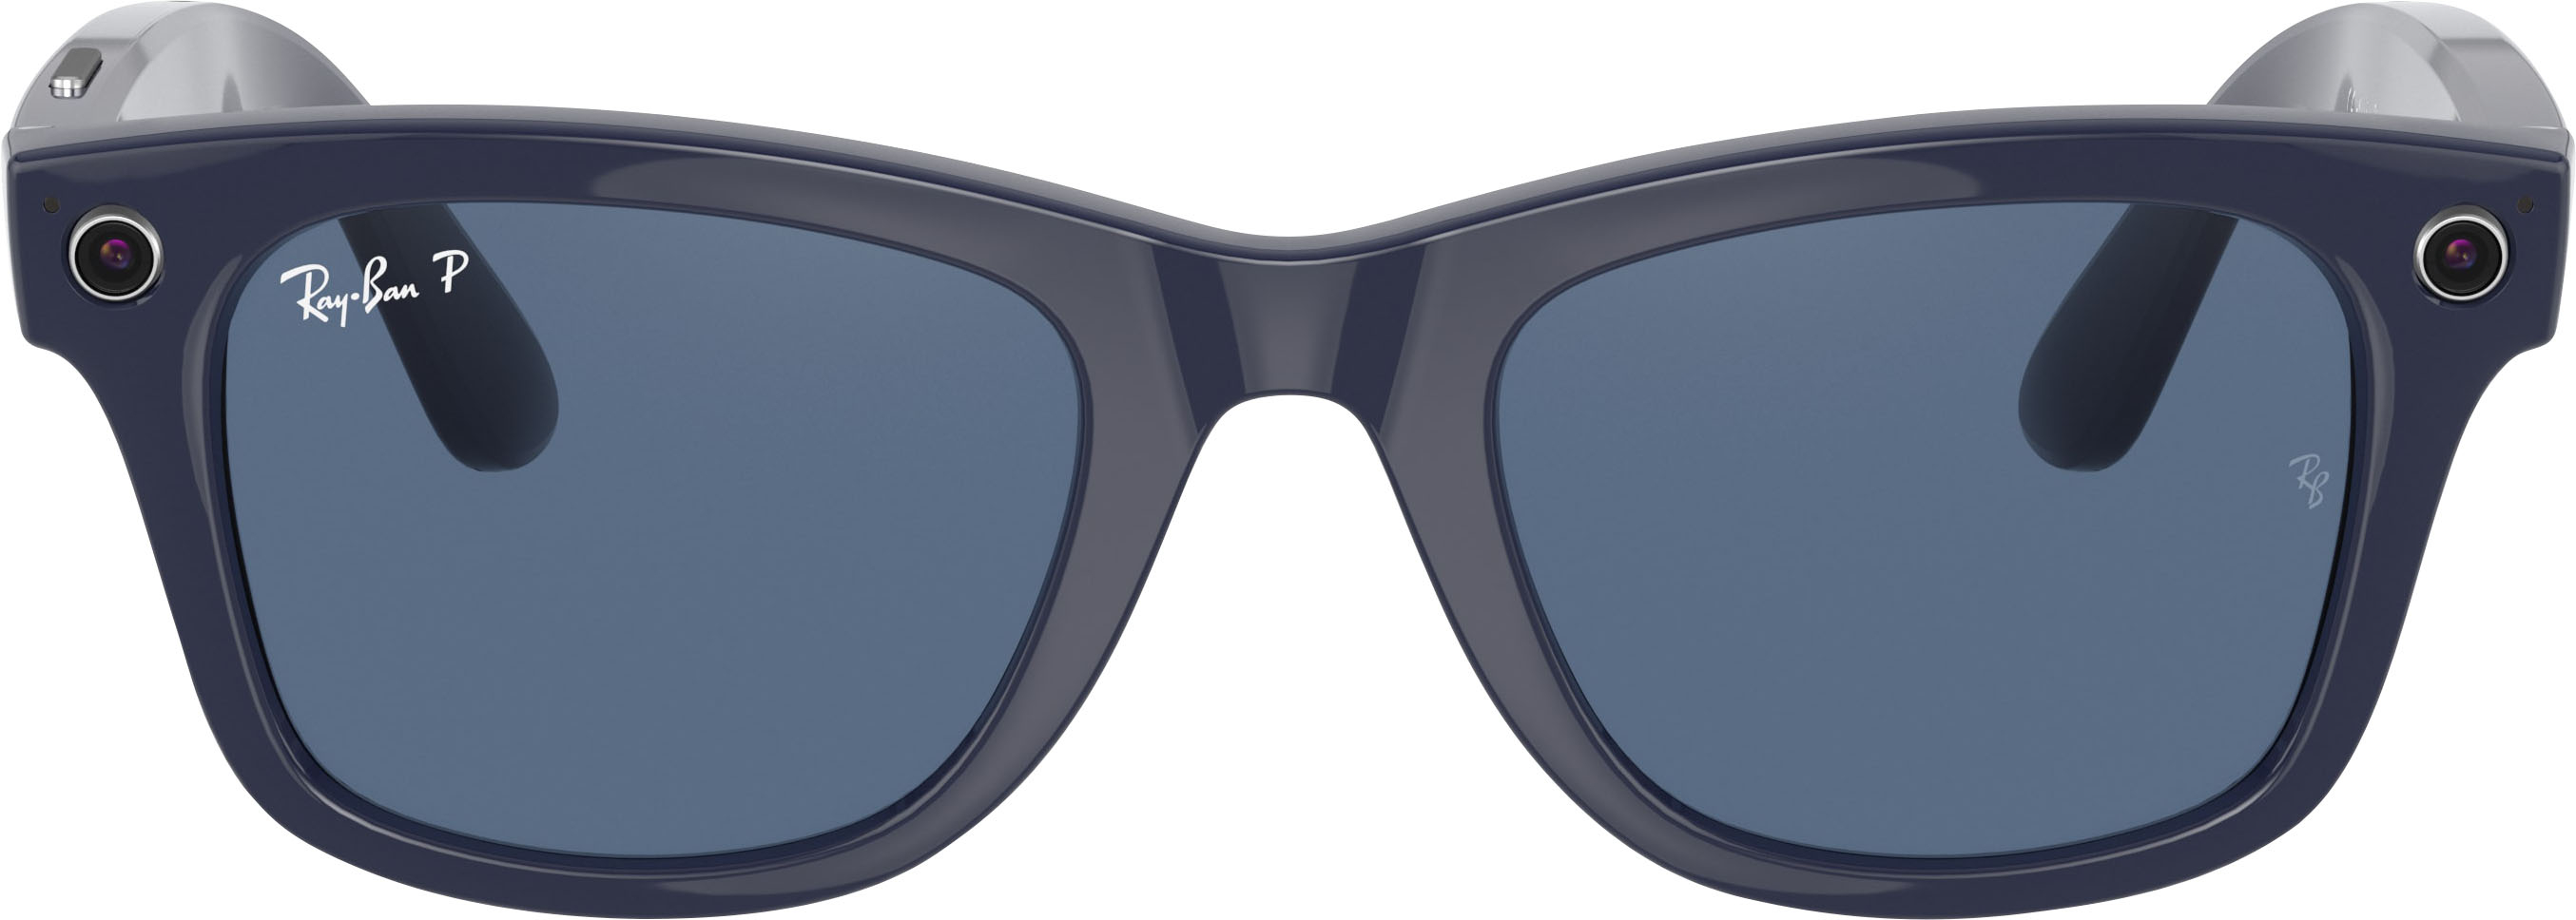 Angle View: Ray-Ban - Stories Wayfarer Smart Glasses 50mm - Shiny Blue/Dark Blue Polarized